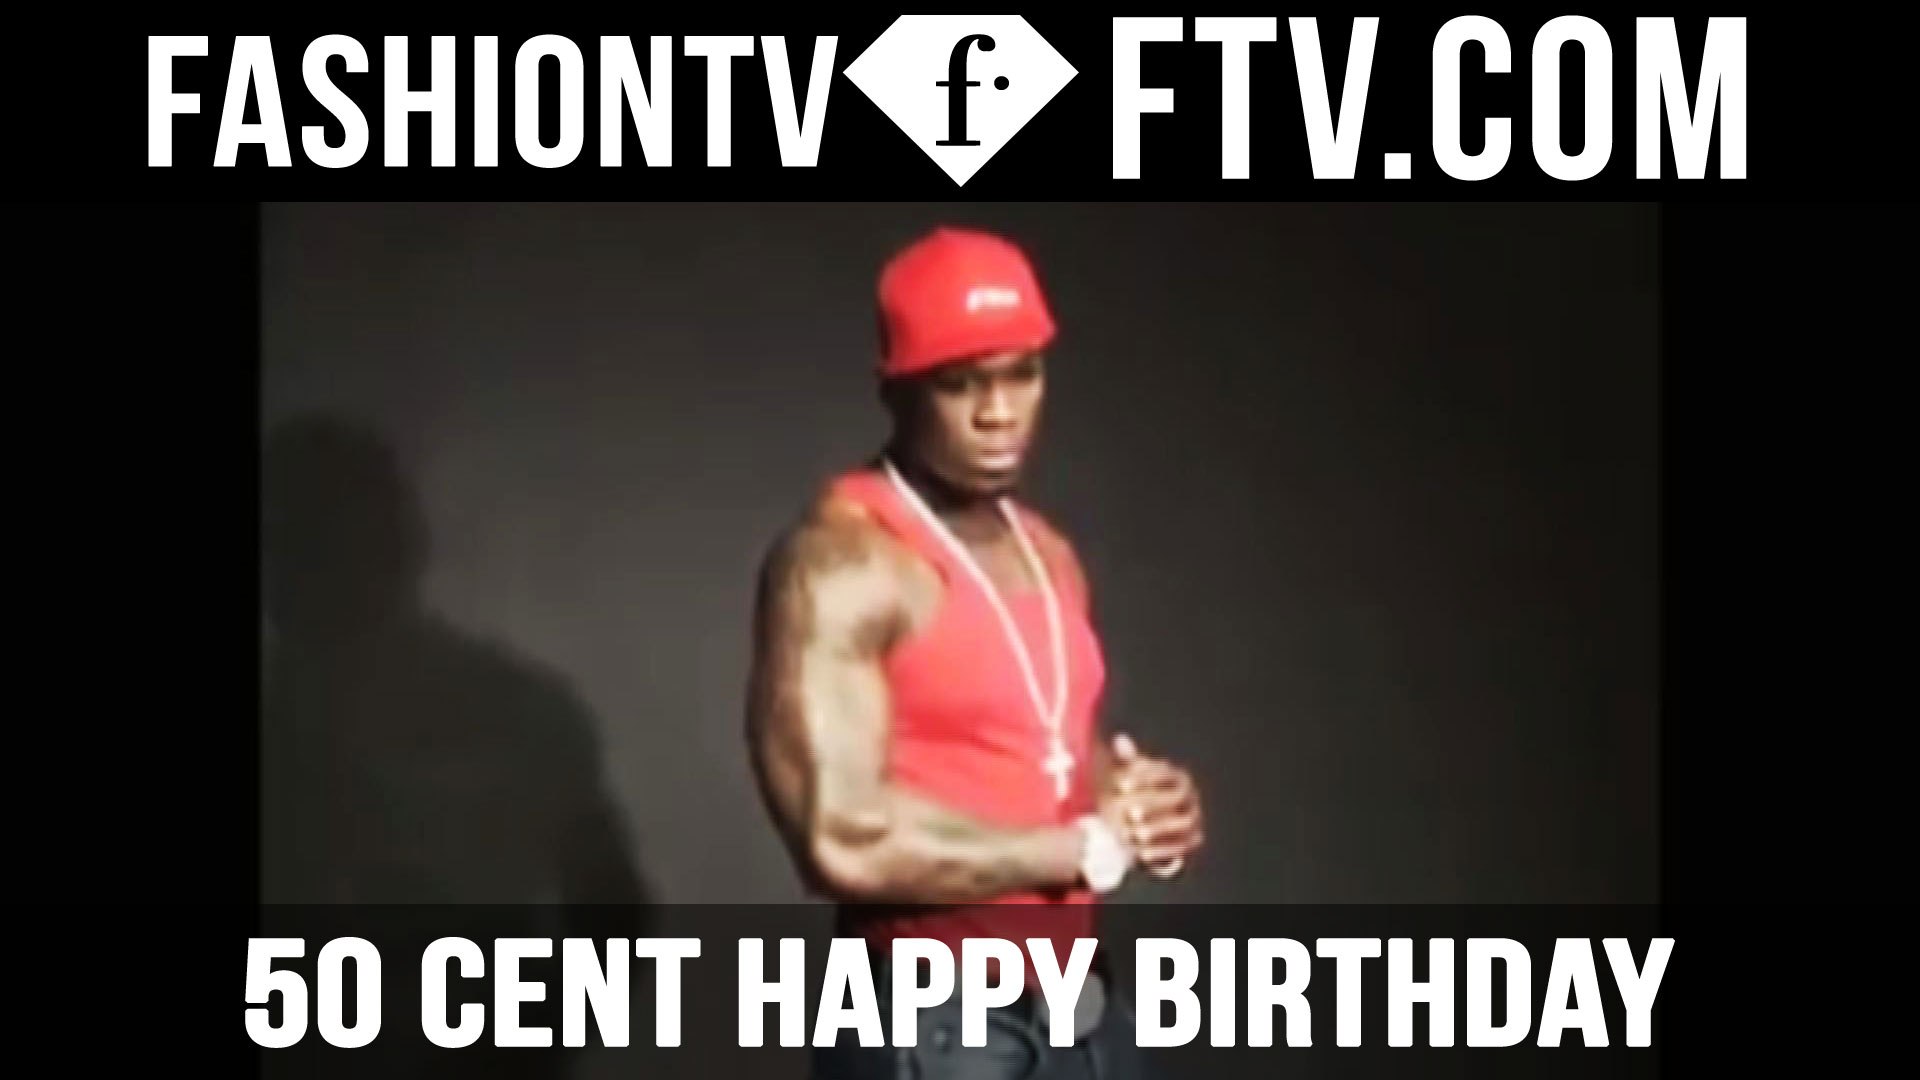 50 Cent Happy Birthday Ftv Com.